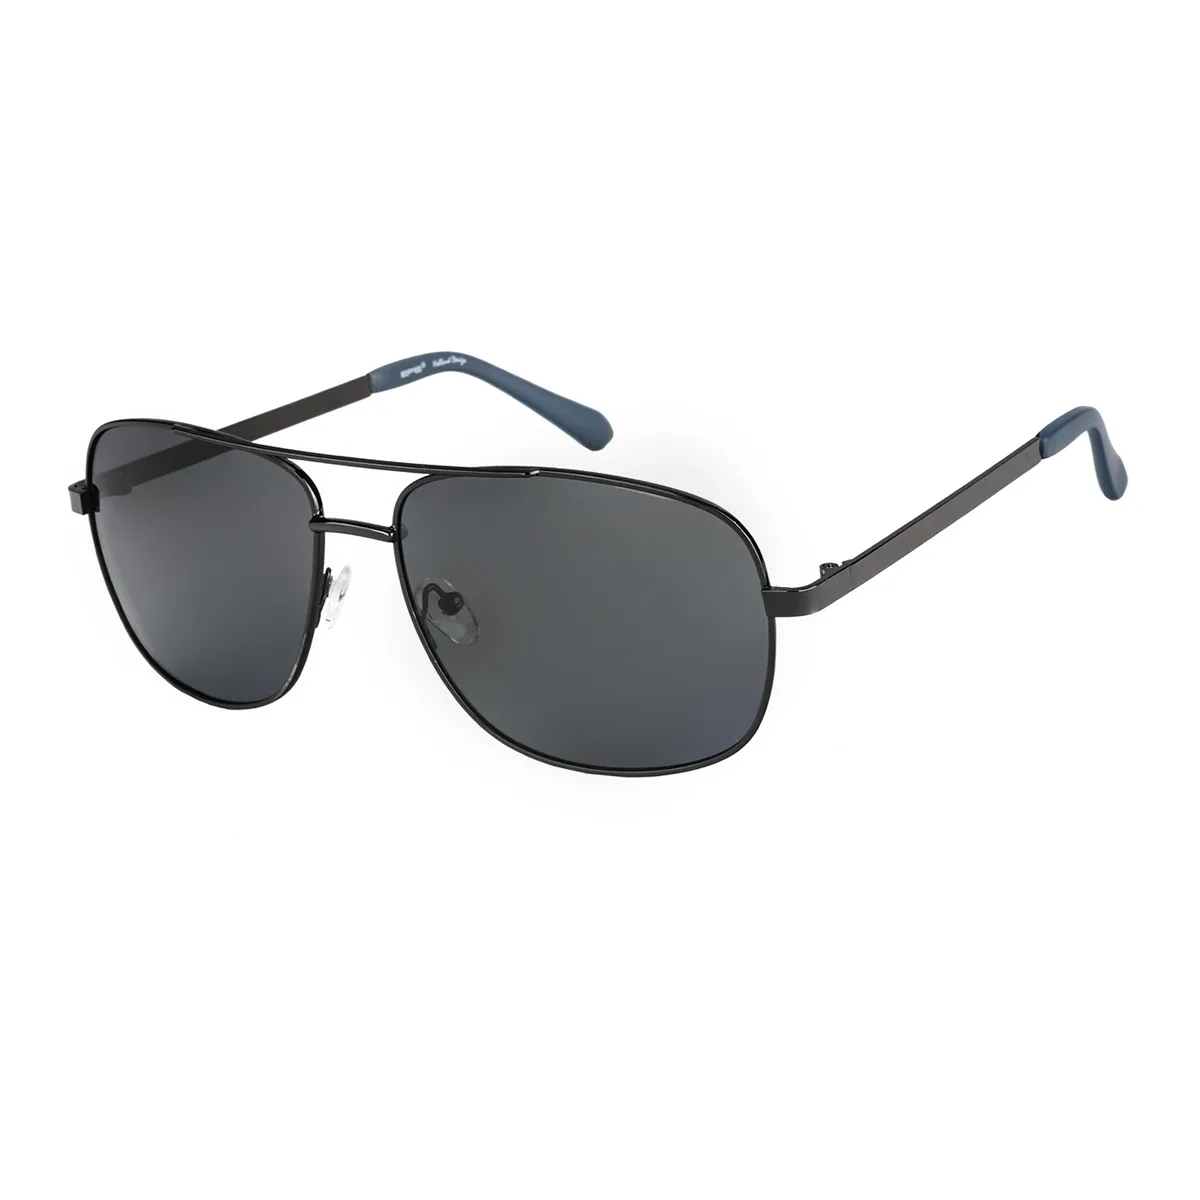 Classic Aviator Black Sunglasses for Men